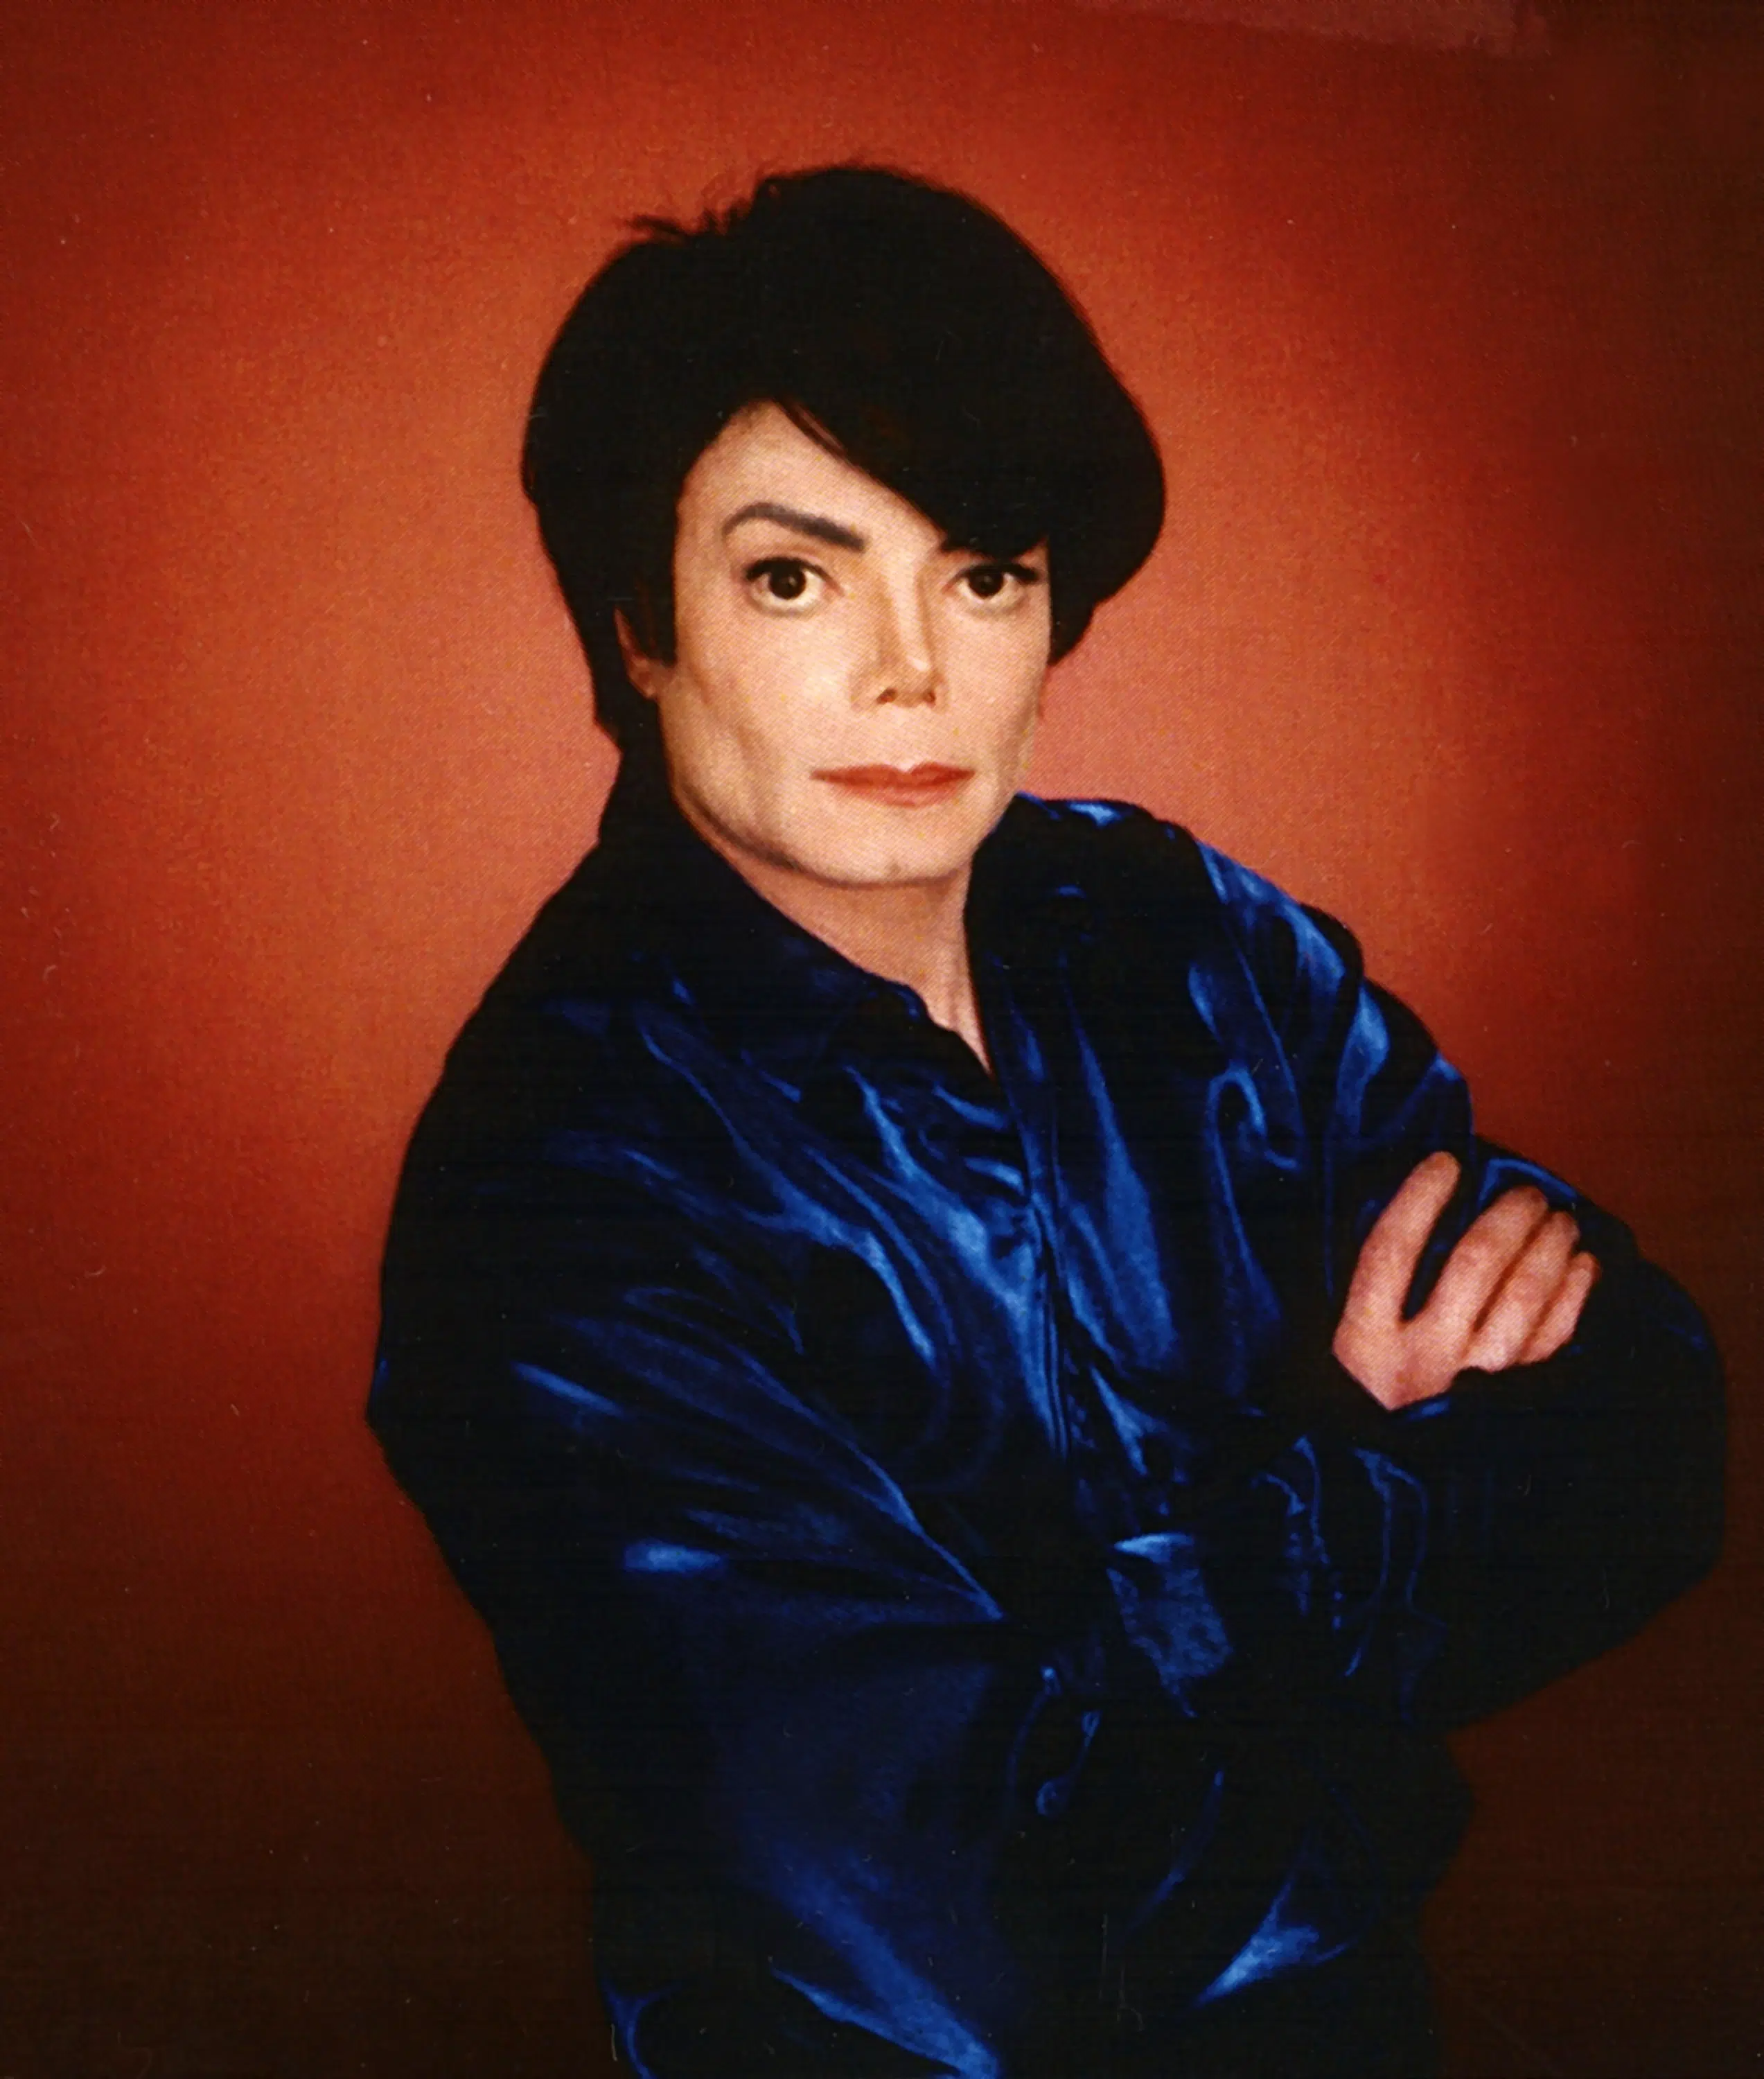 Michael Jackson, November 10, 2001